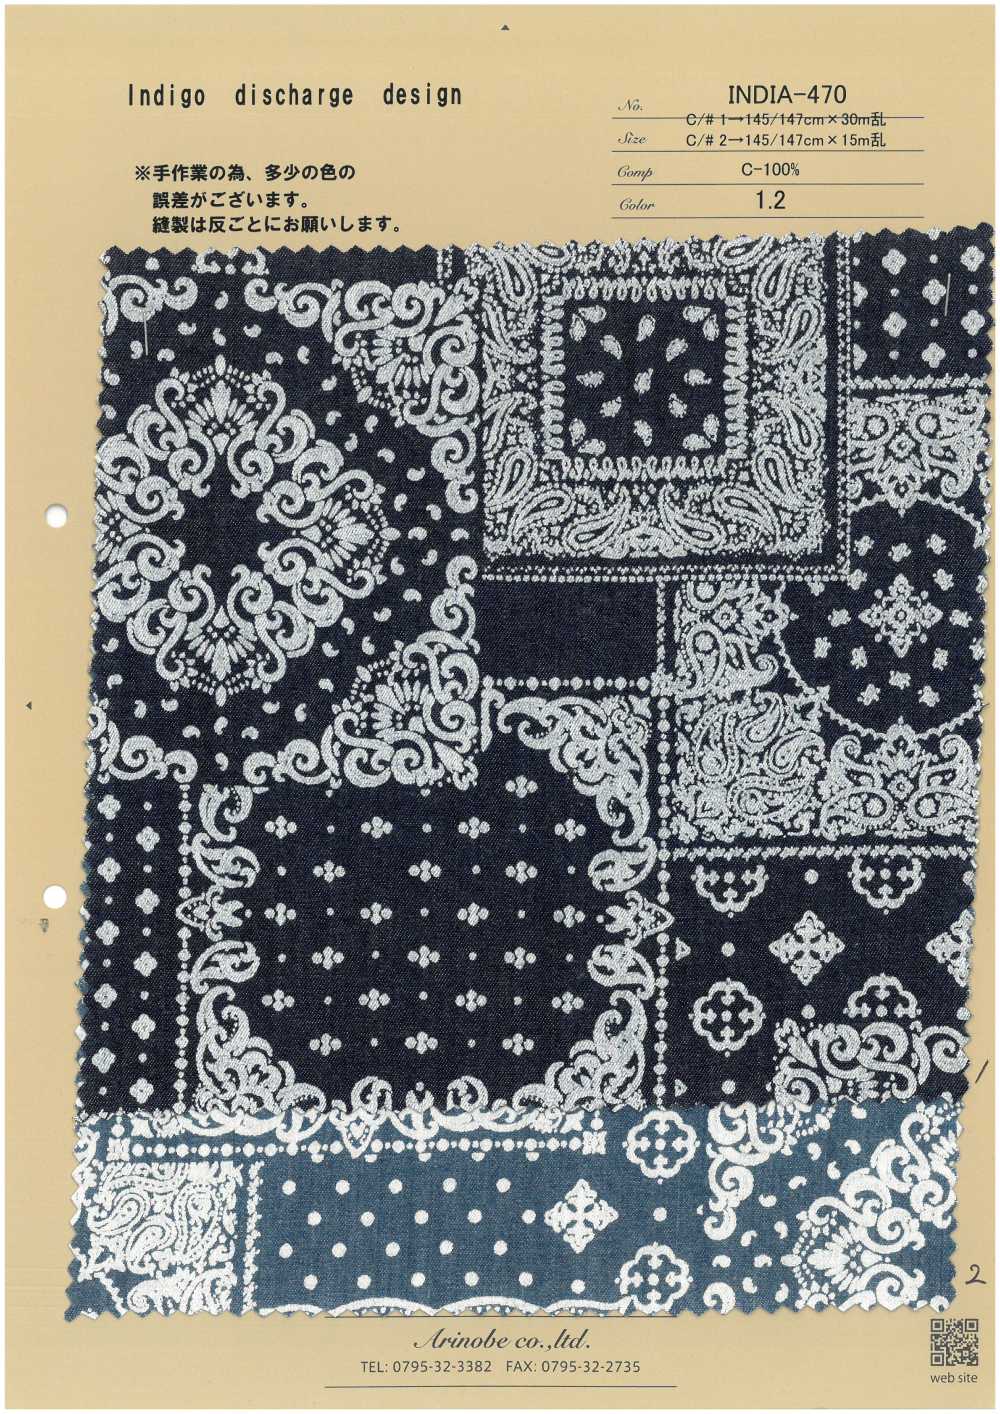 INDIA-470 Indigo-Entladungsdesign[Textilgewebe] ARINOBE CO., LTD.